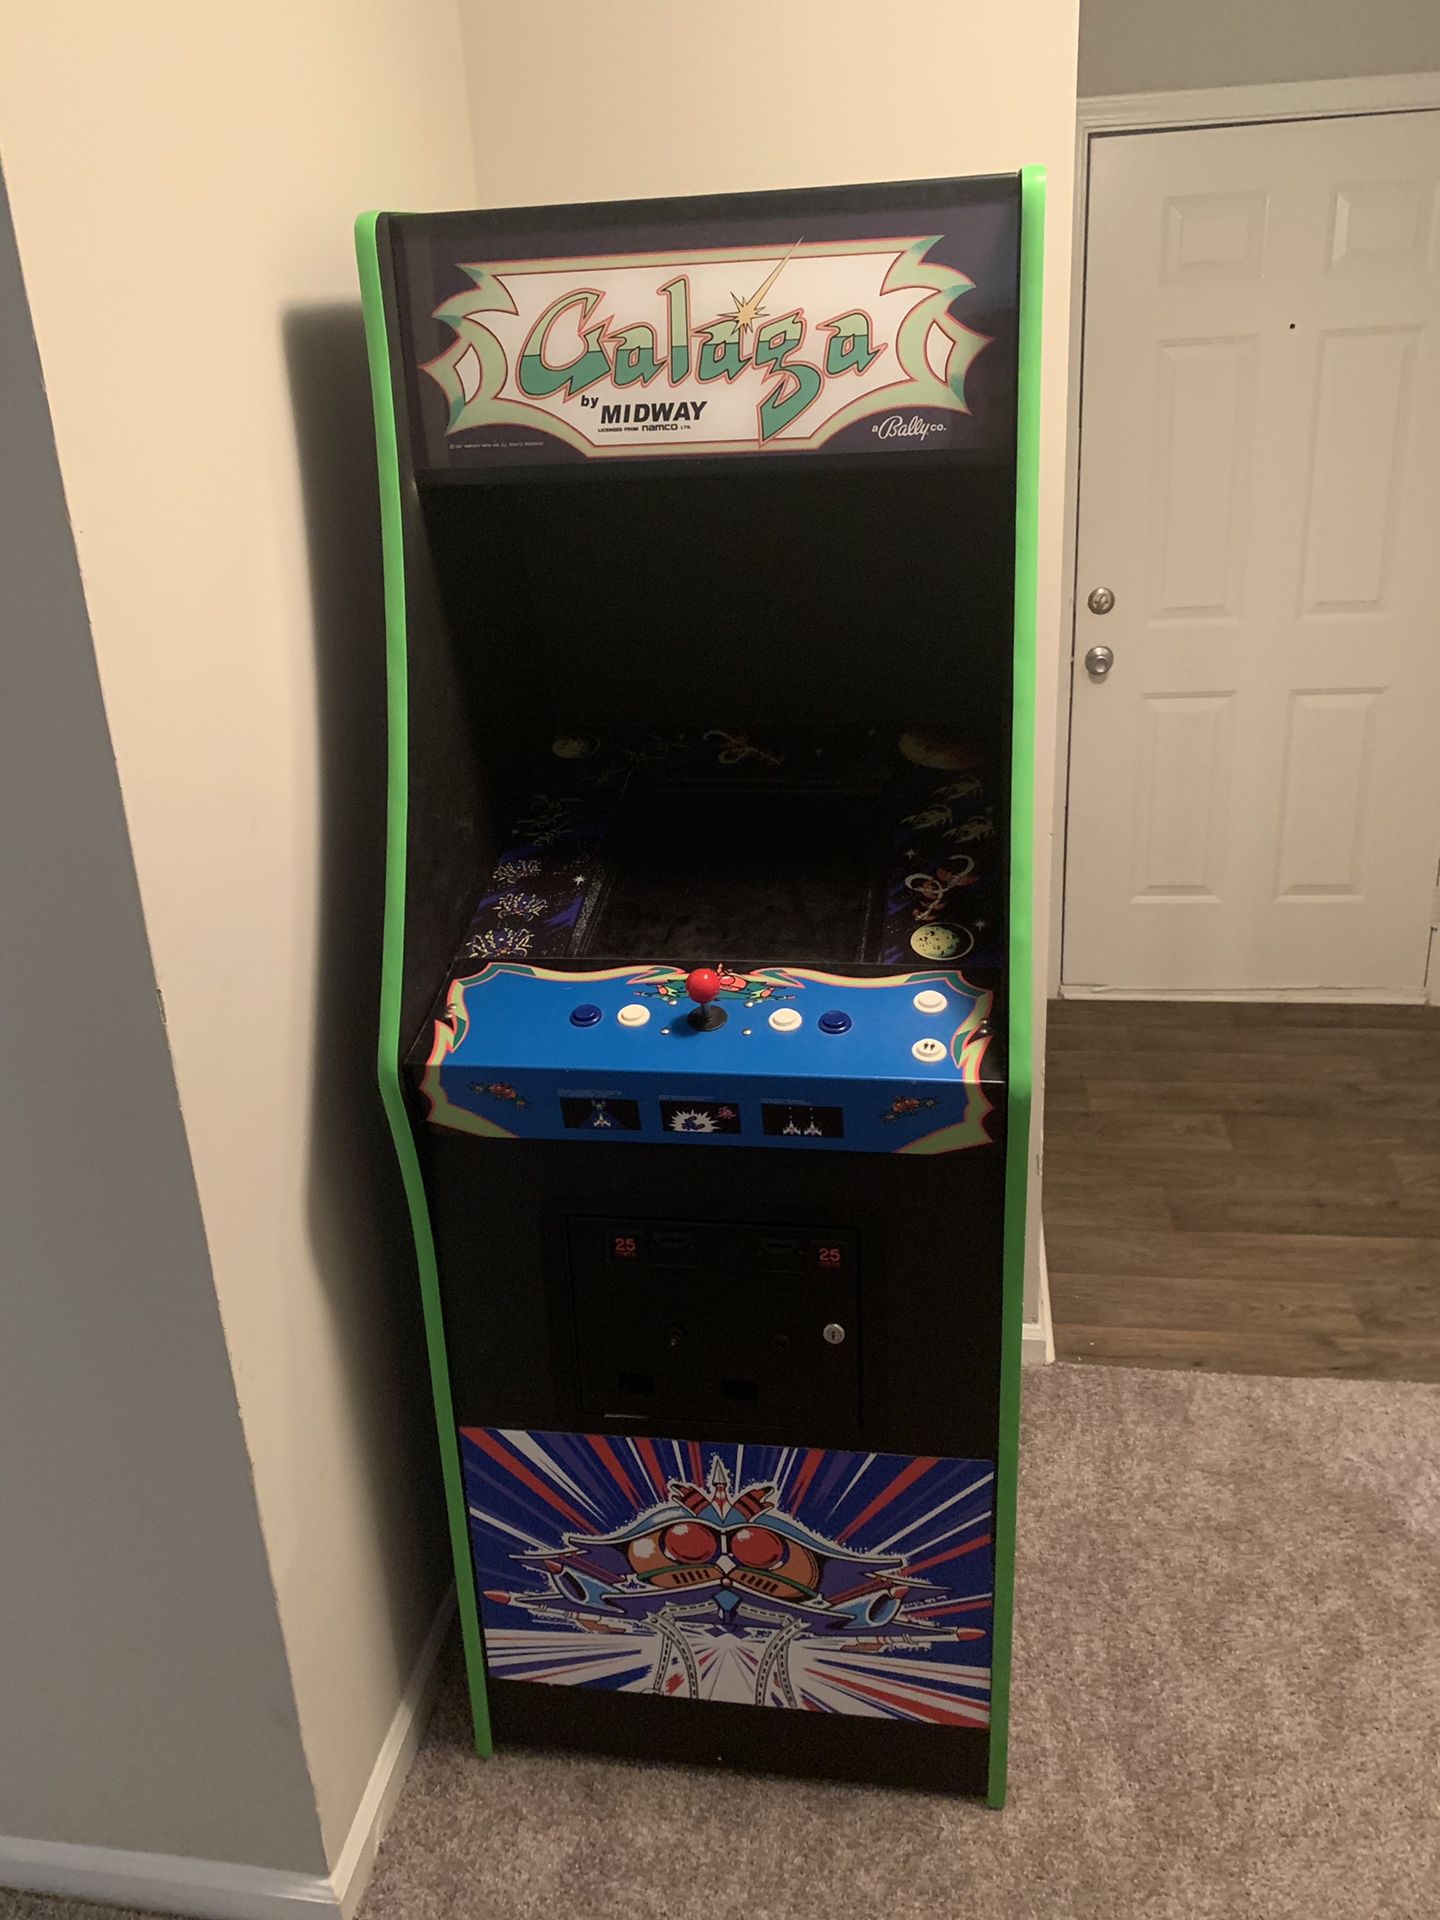 Midway Galaga Arcade Machine - 60 Games!